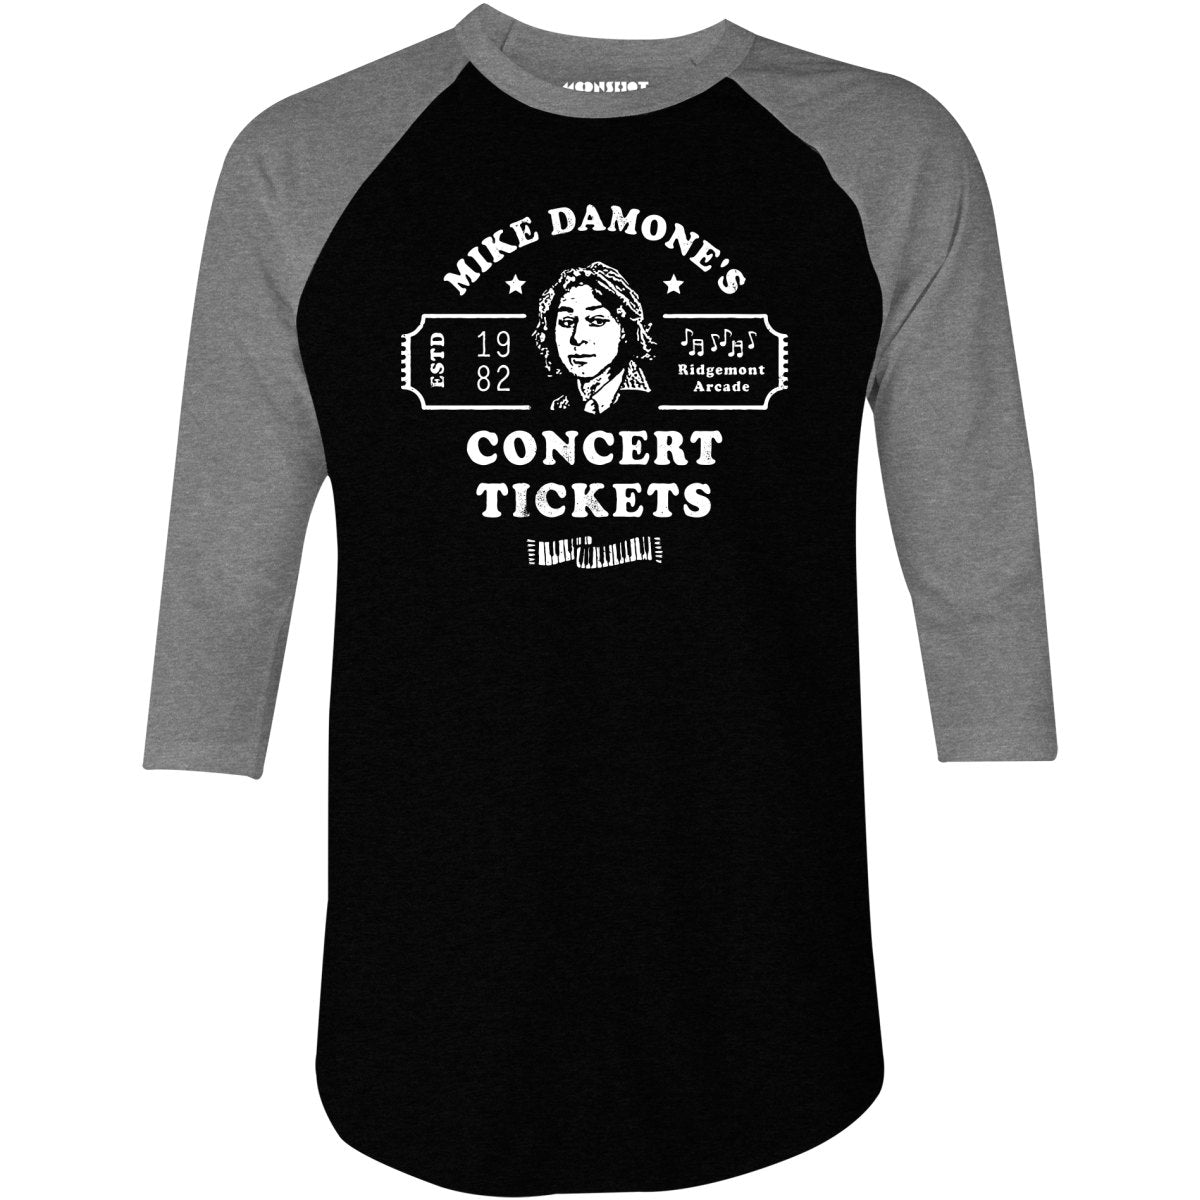 Mike Damone's Concert Tickets - 3/4 Sleeve Raglan T-Shirt